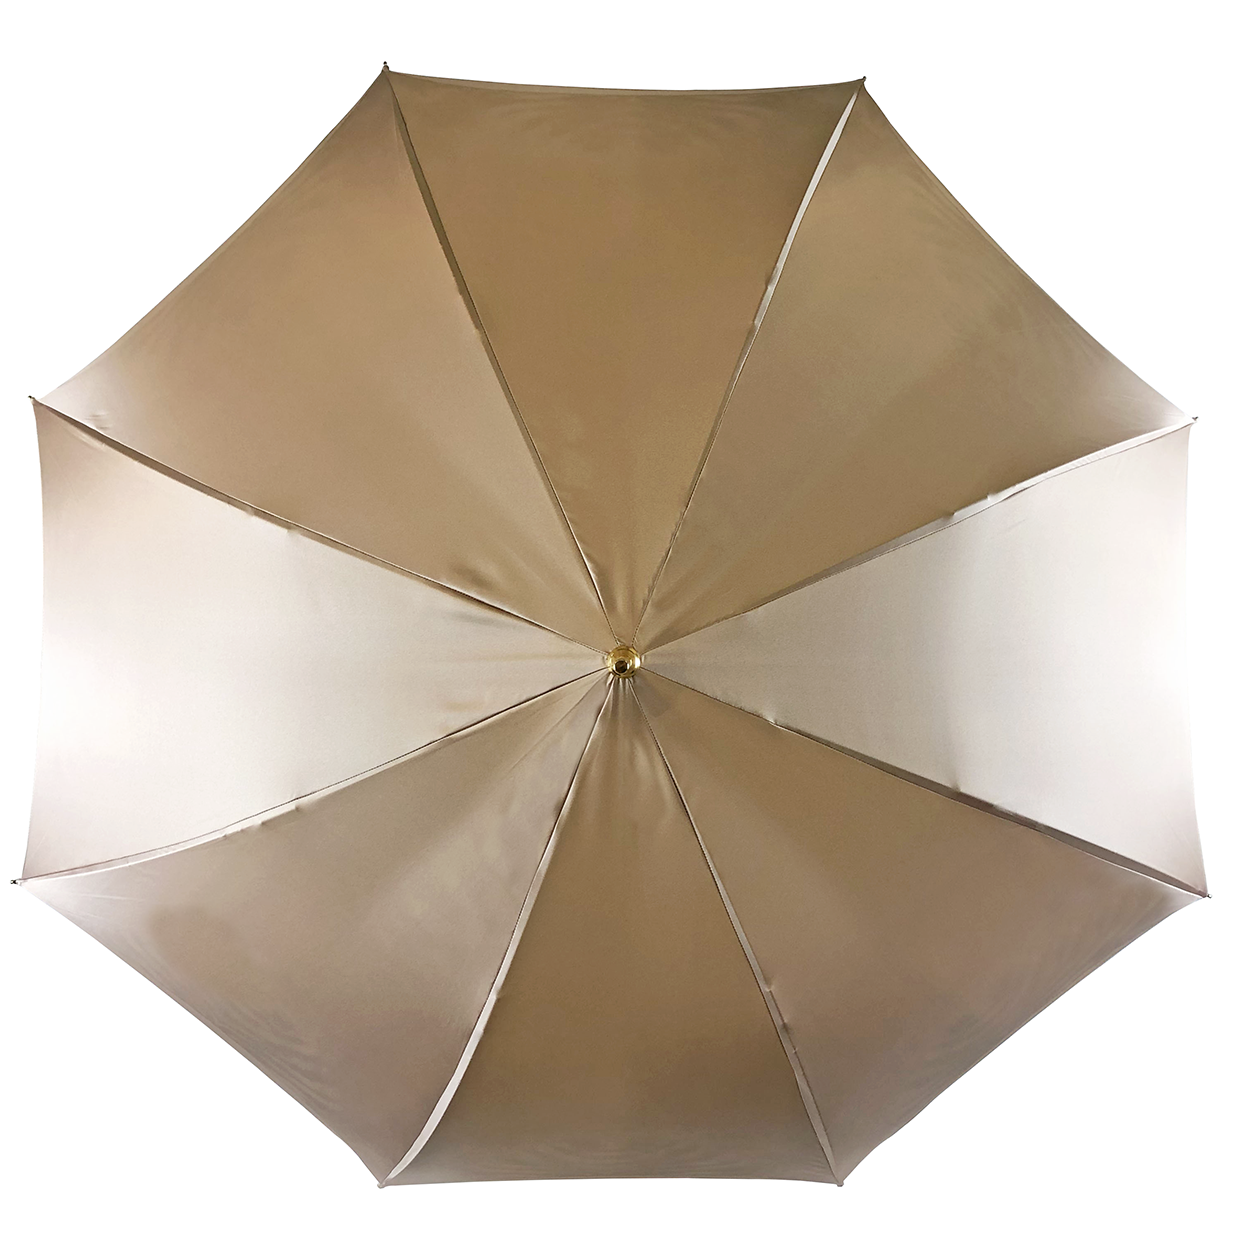 Fine and Elegant Animalier Umbrella - "ilMarchesato"